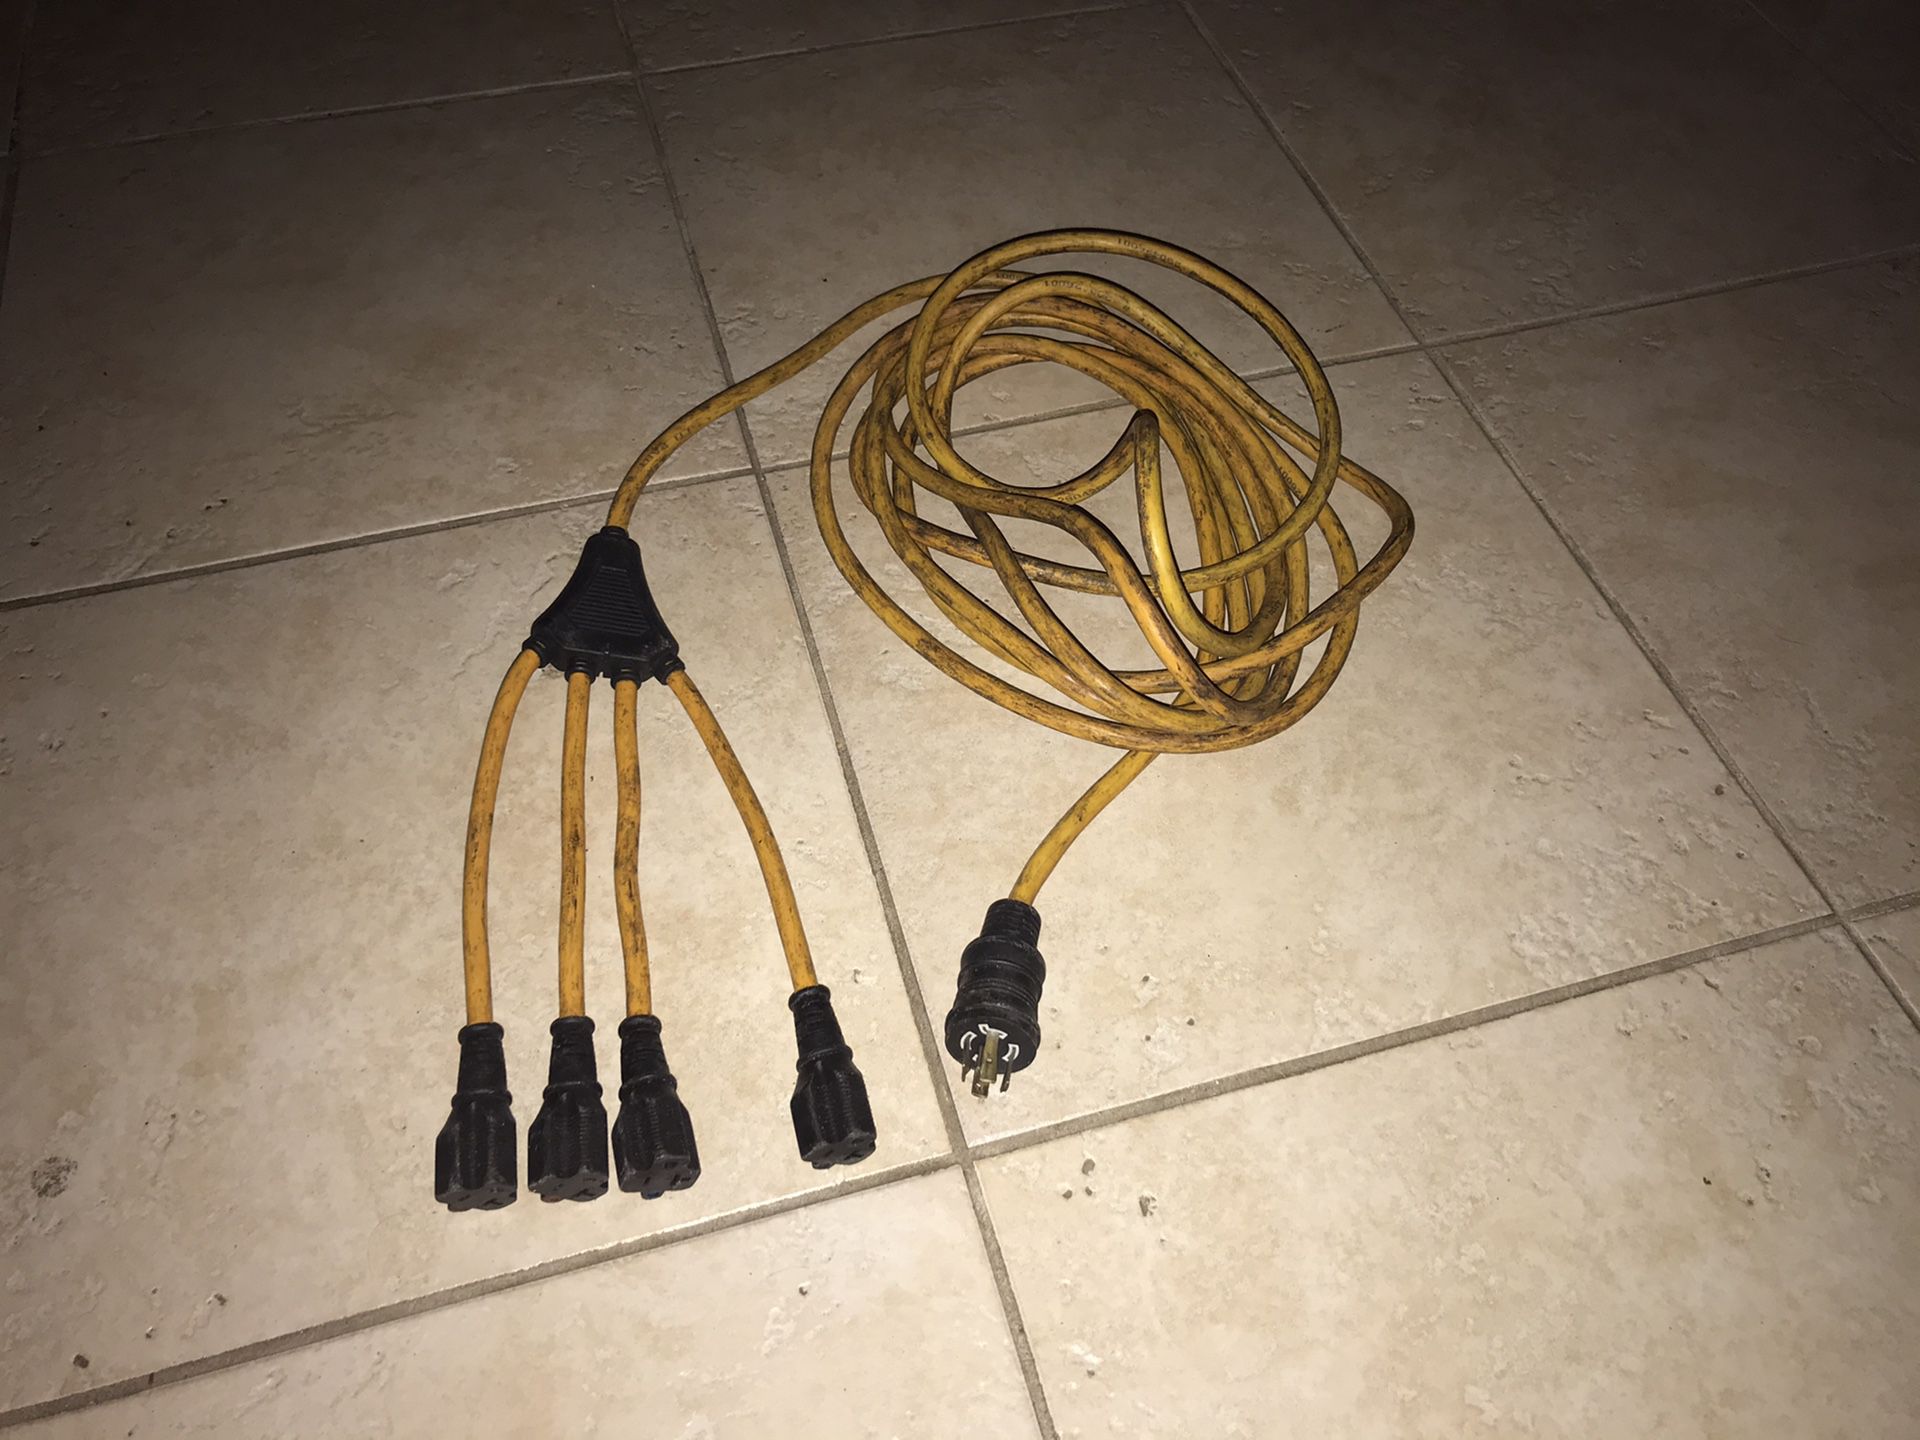 220 generator extension cord